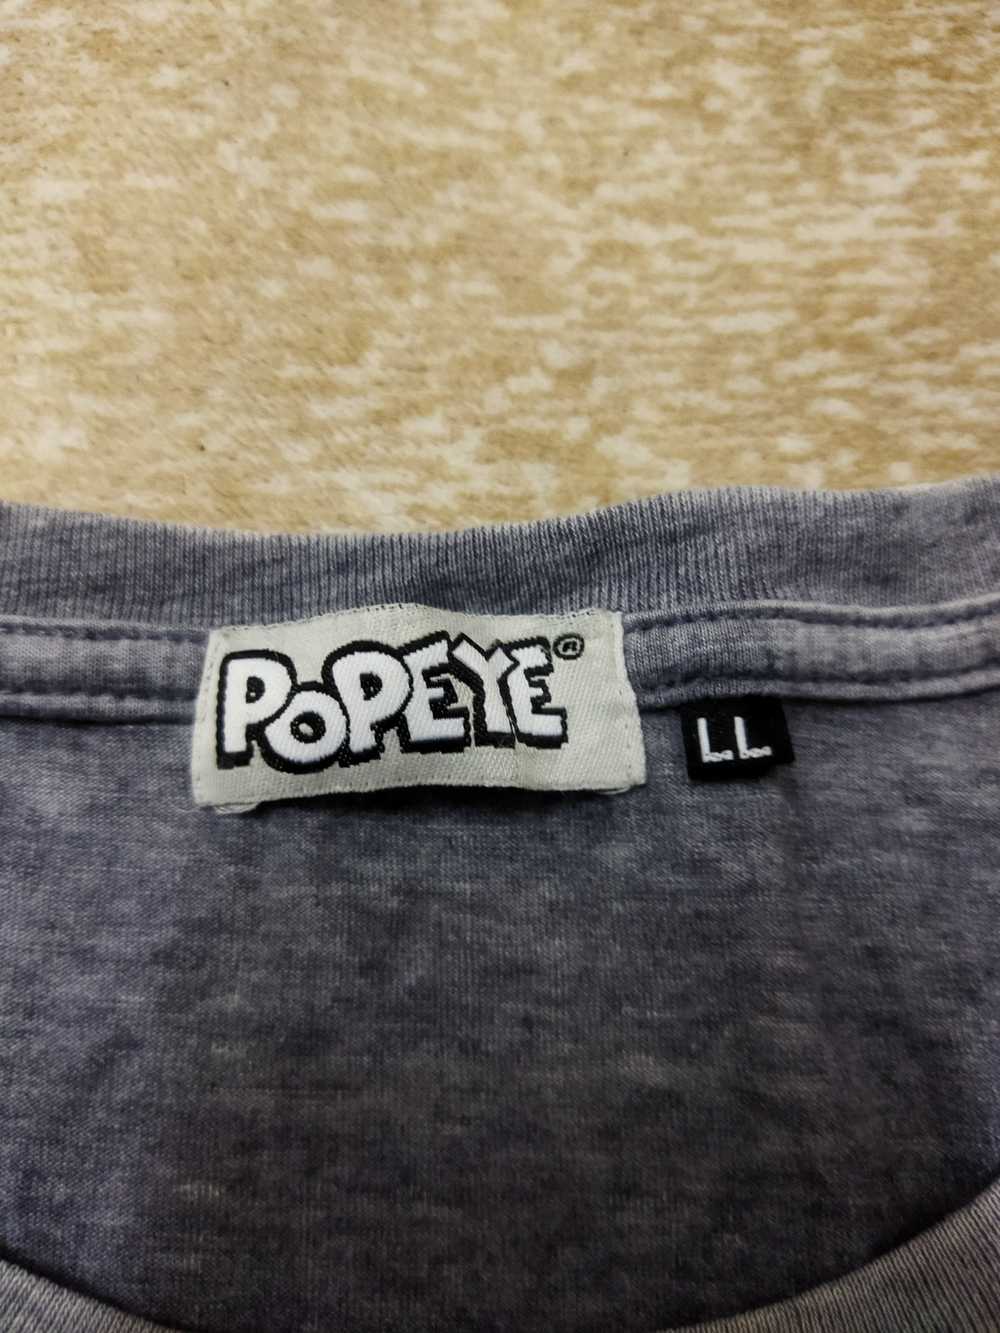 Japanese Brand Popeye Tee - image 4